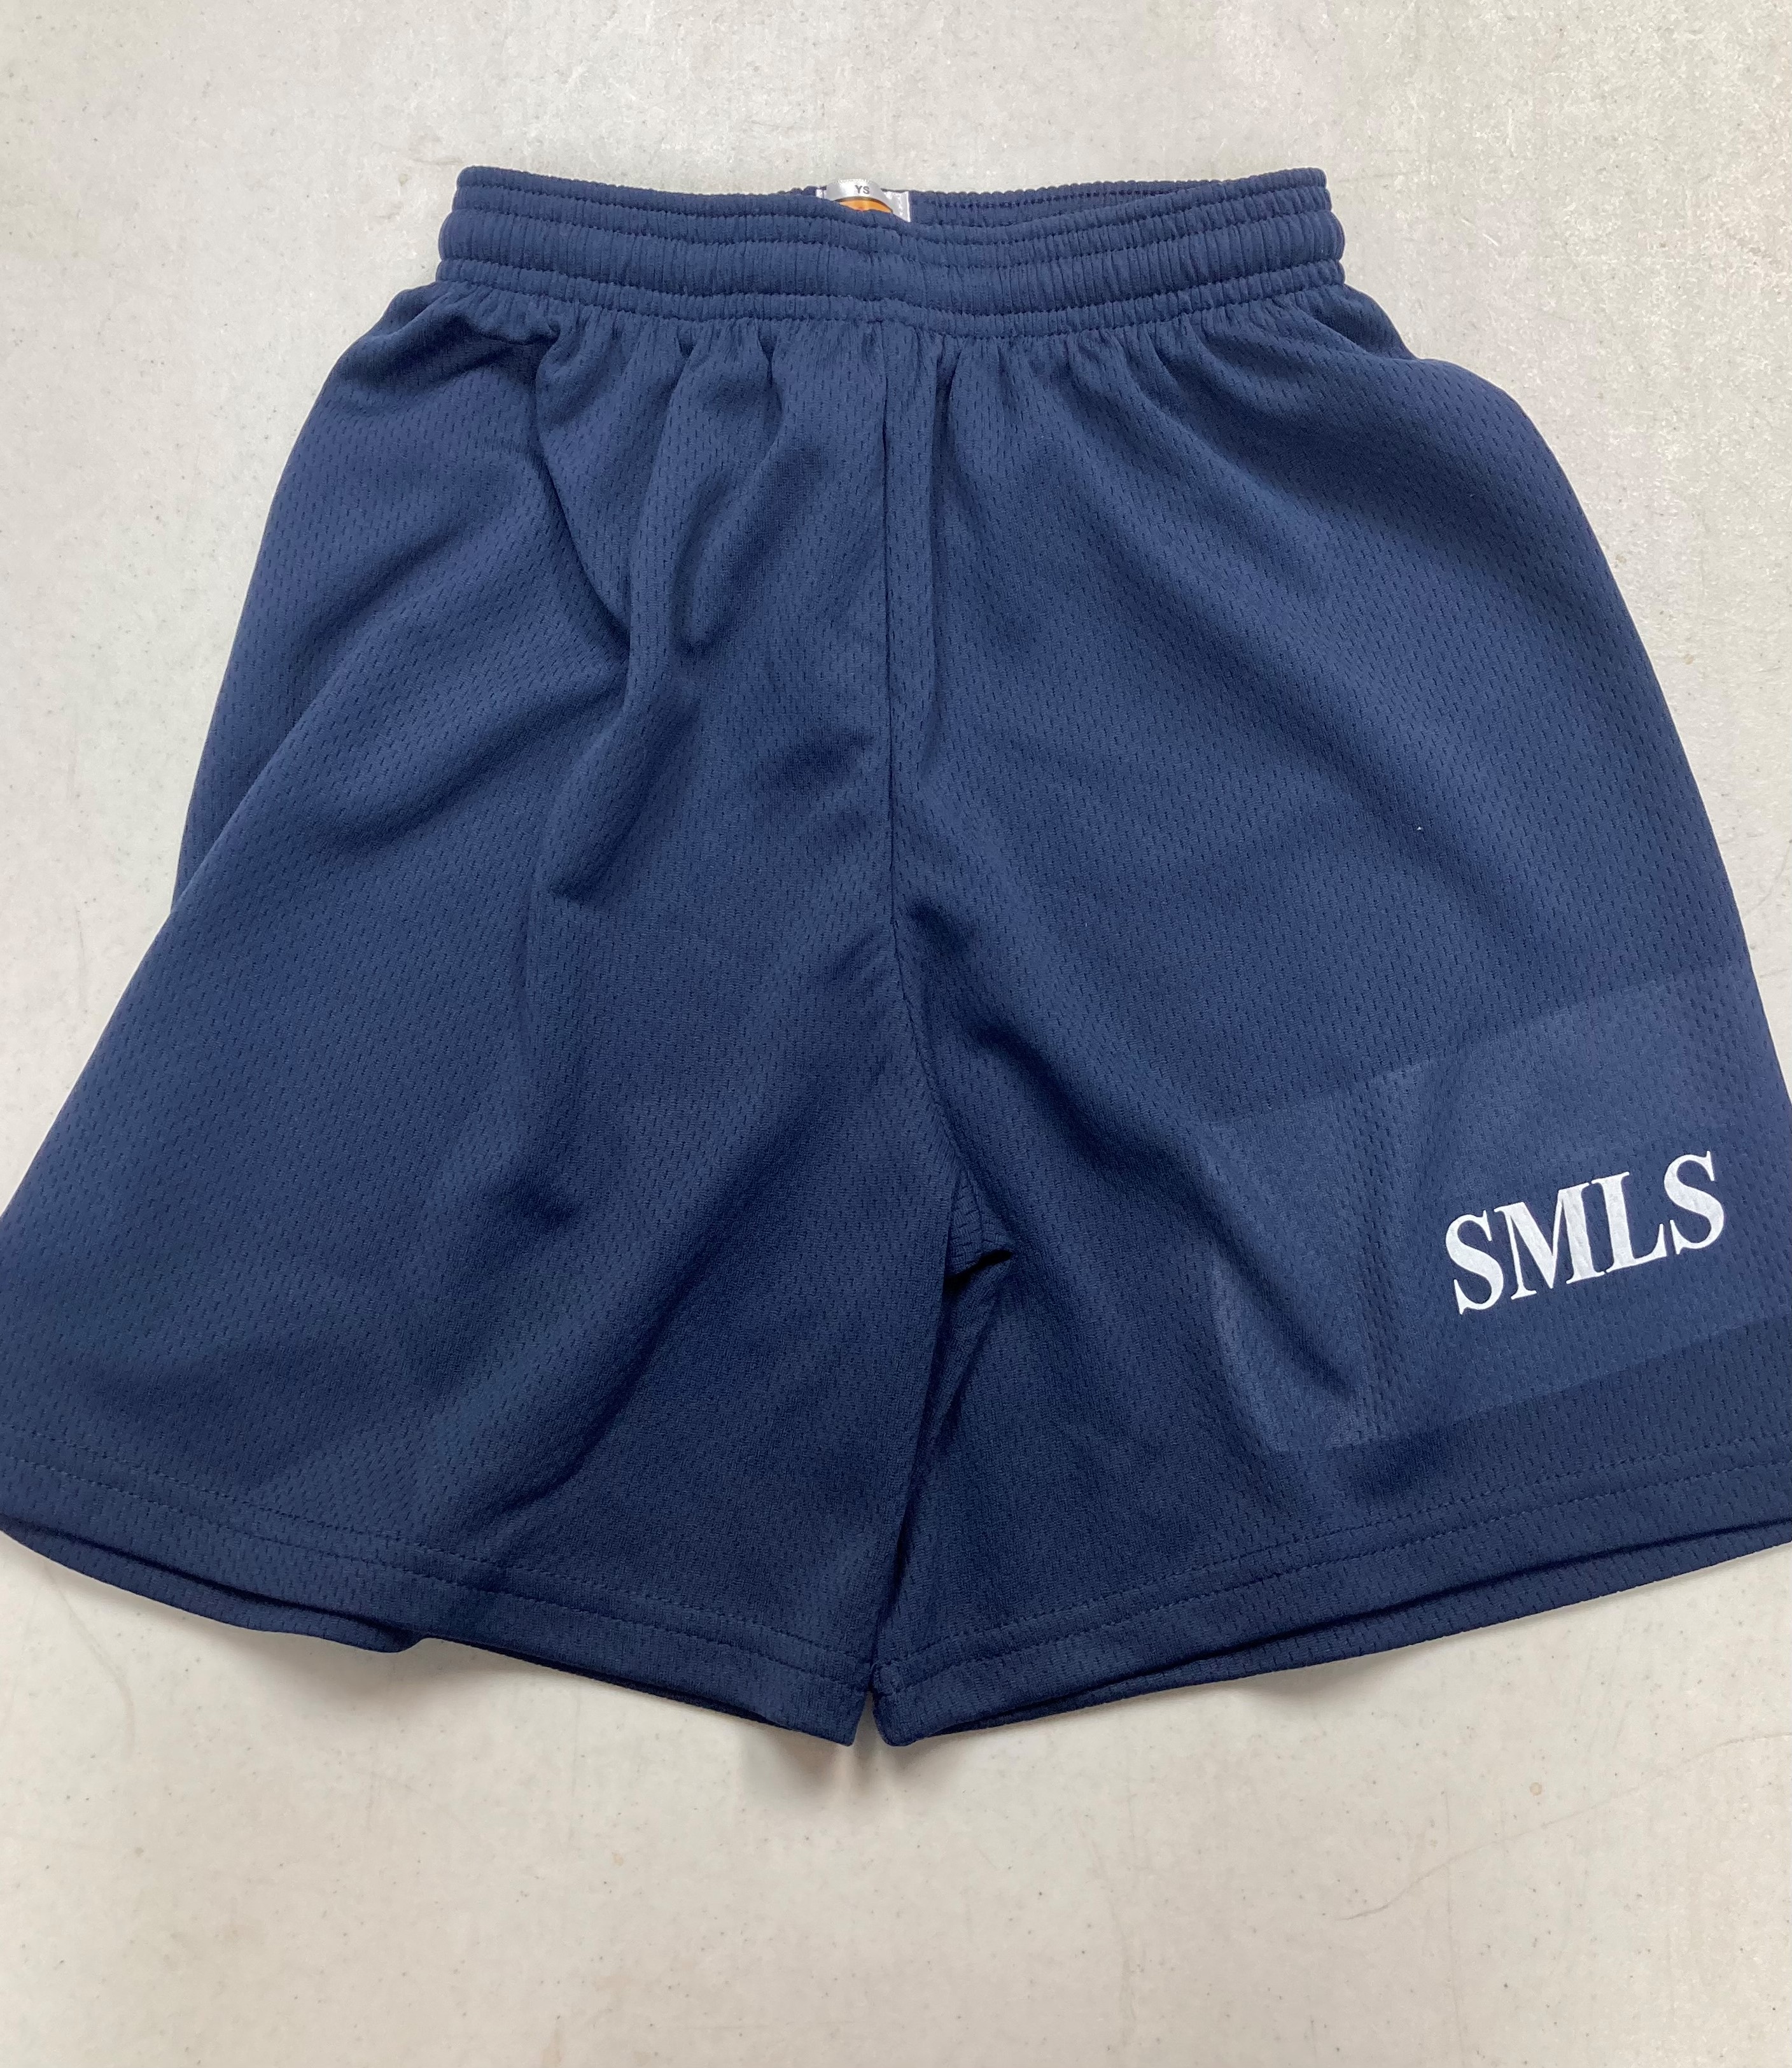 SMLS PE Youth Shorts 6-8th